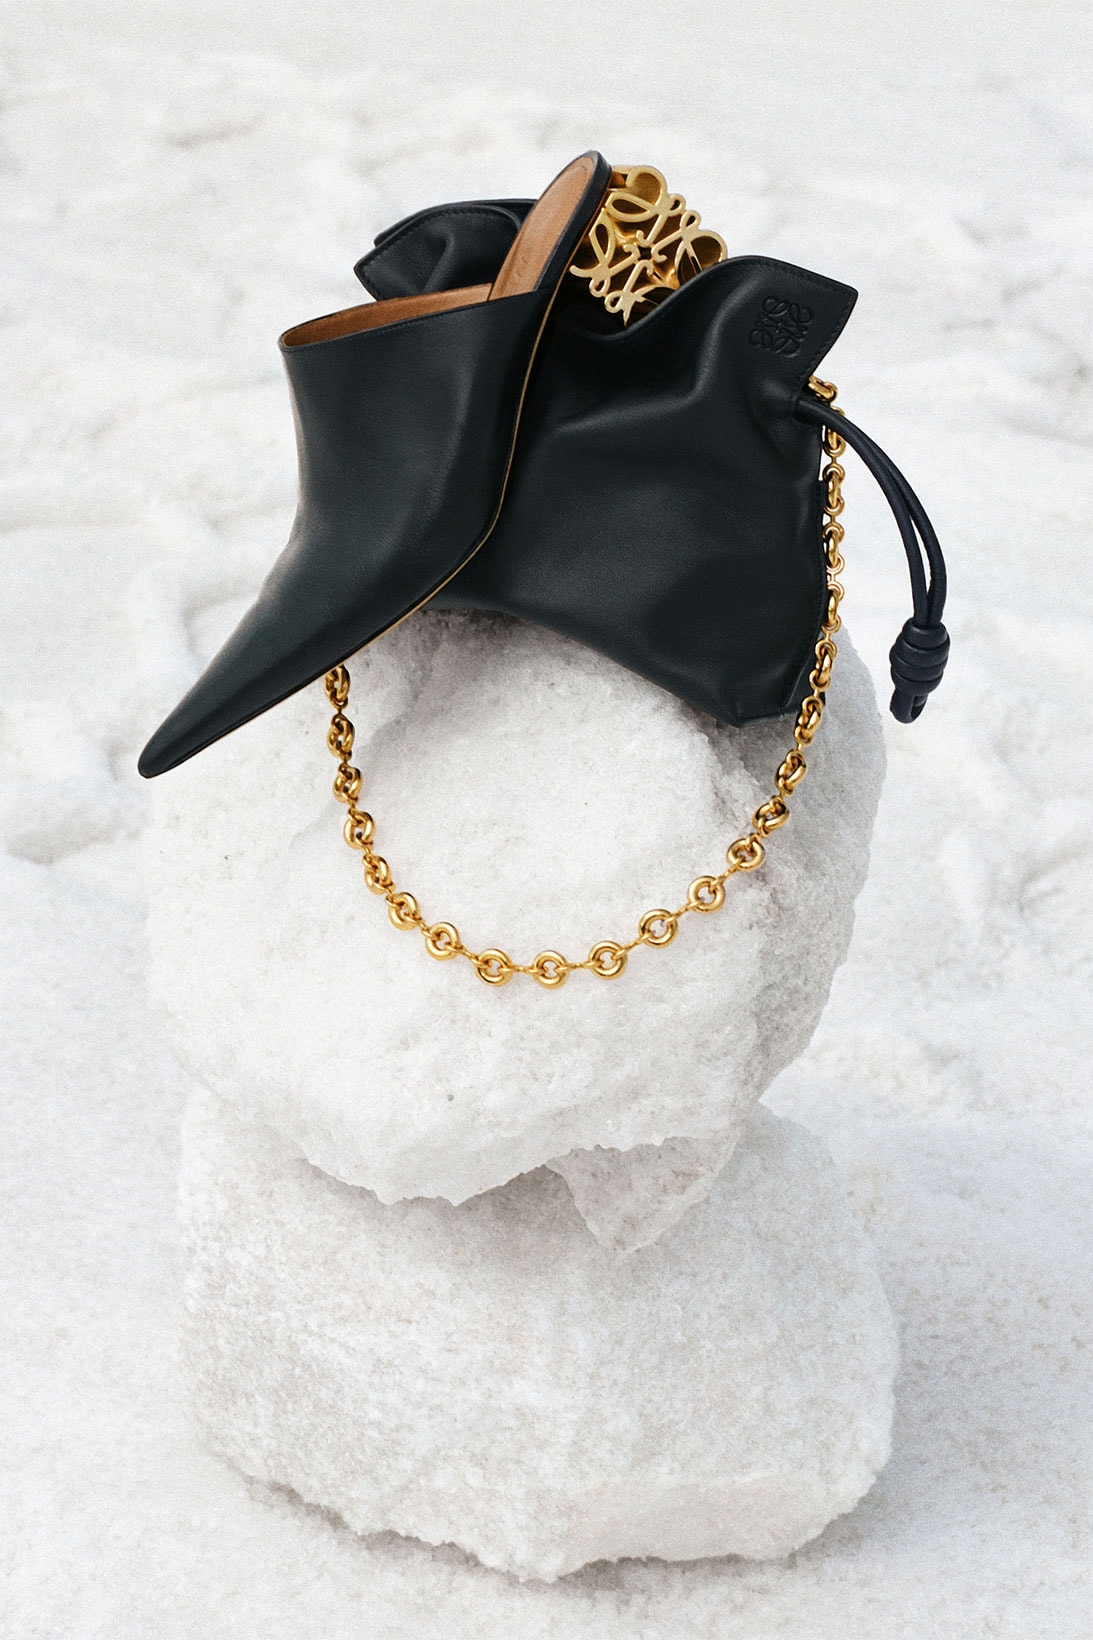 Loewe Holiday Campaign Christmas Puzzle Goya Flamenco Handbags Sunglasses Release